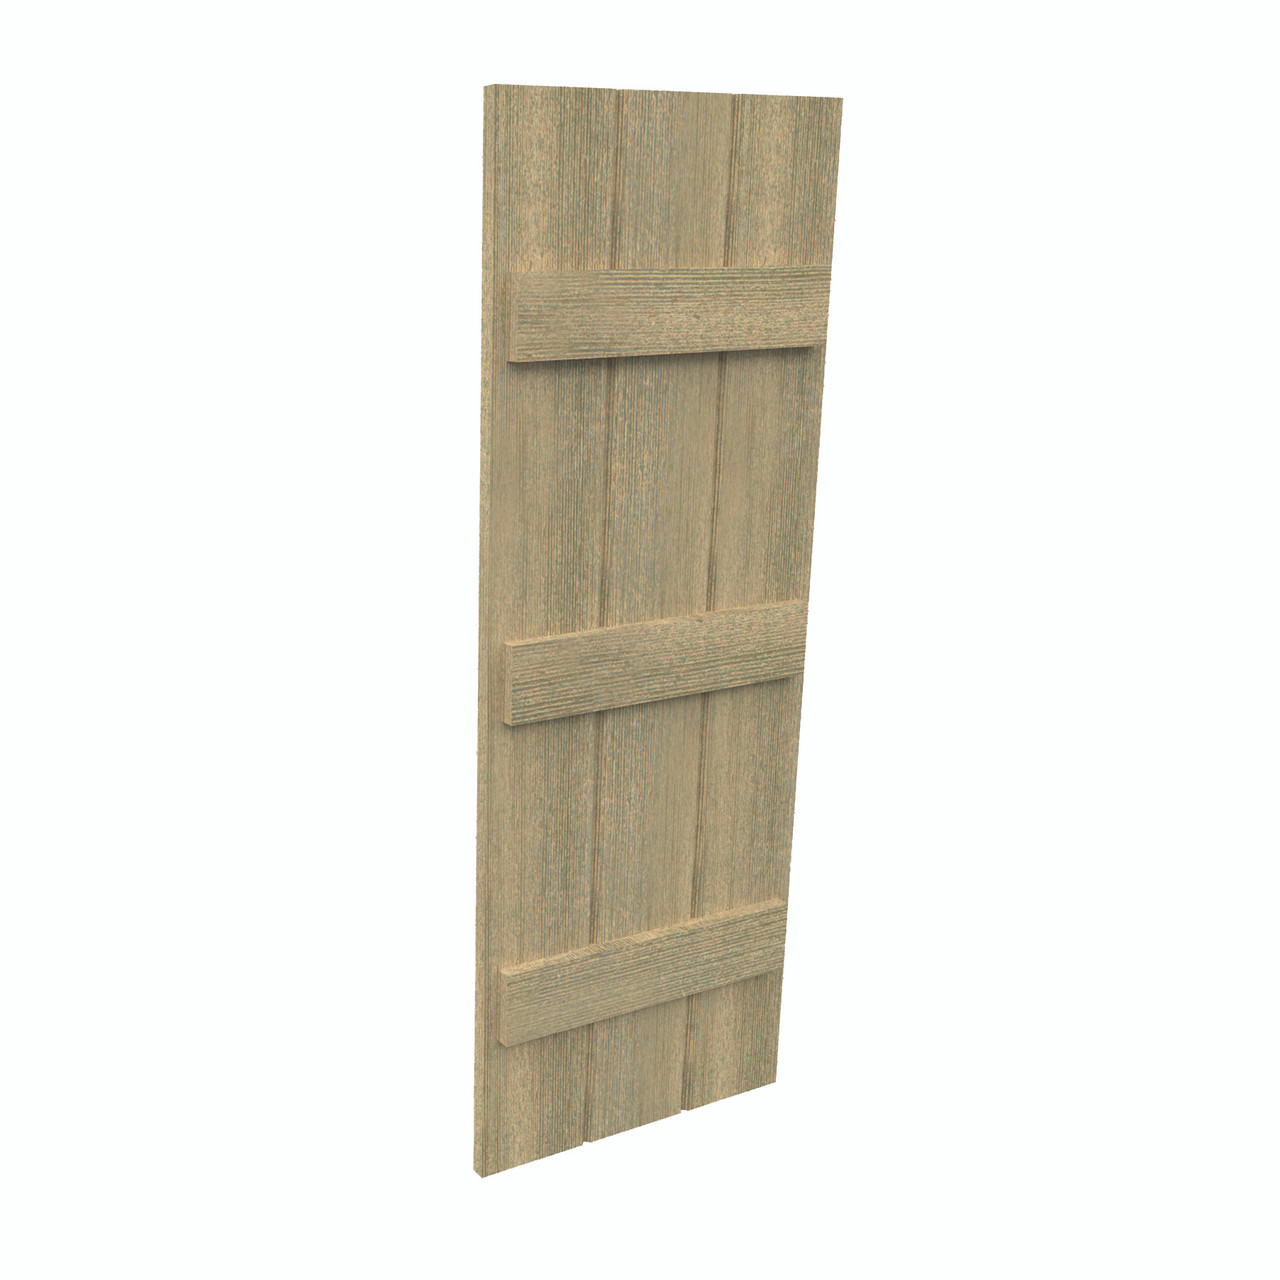 18 inch by 69 inch Plank Shutter with 3-Plank, 3-Batten